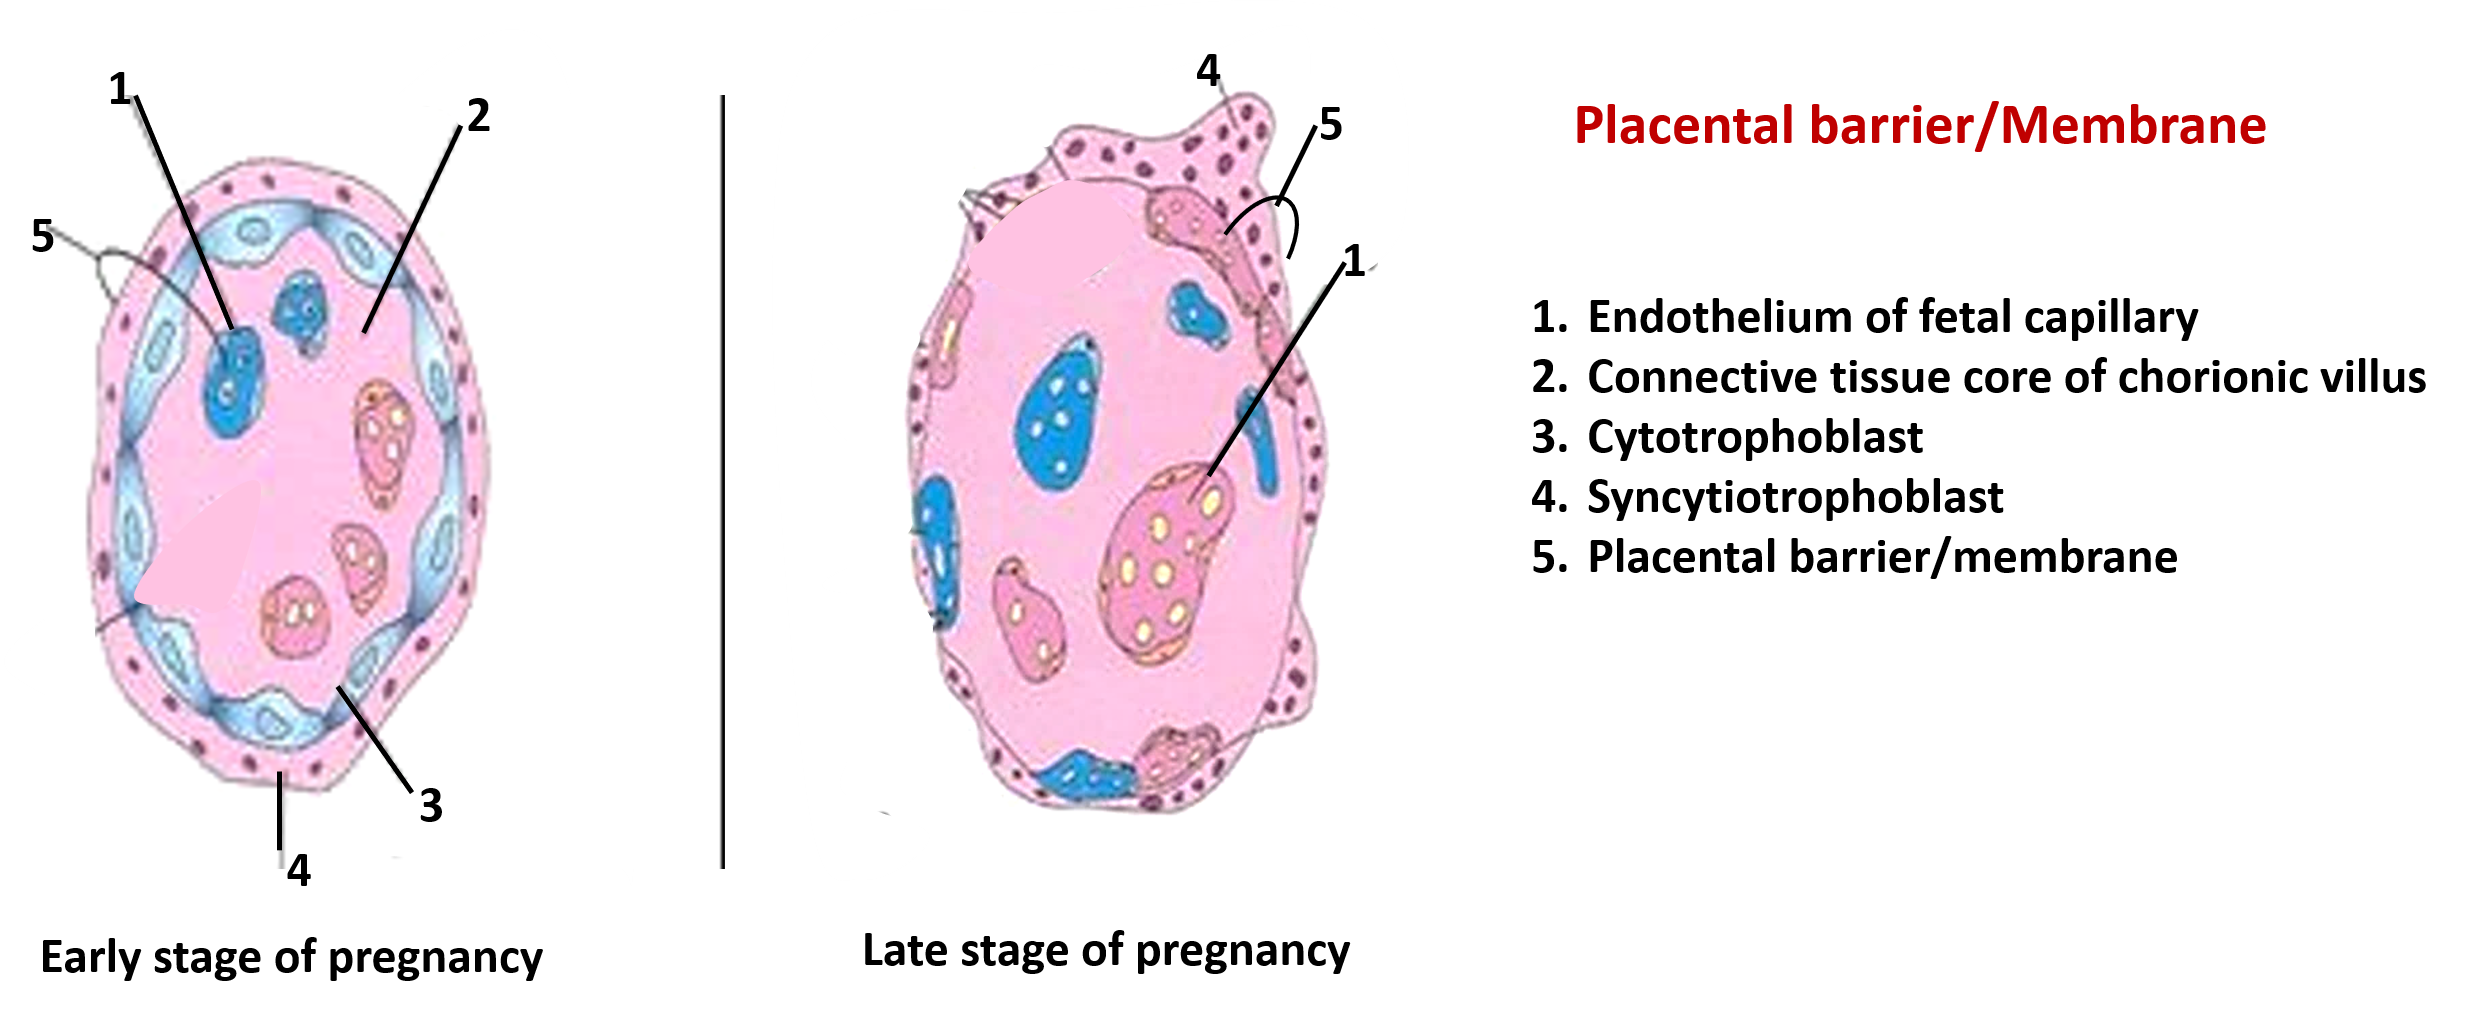 Placental barrier, placental membrane